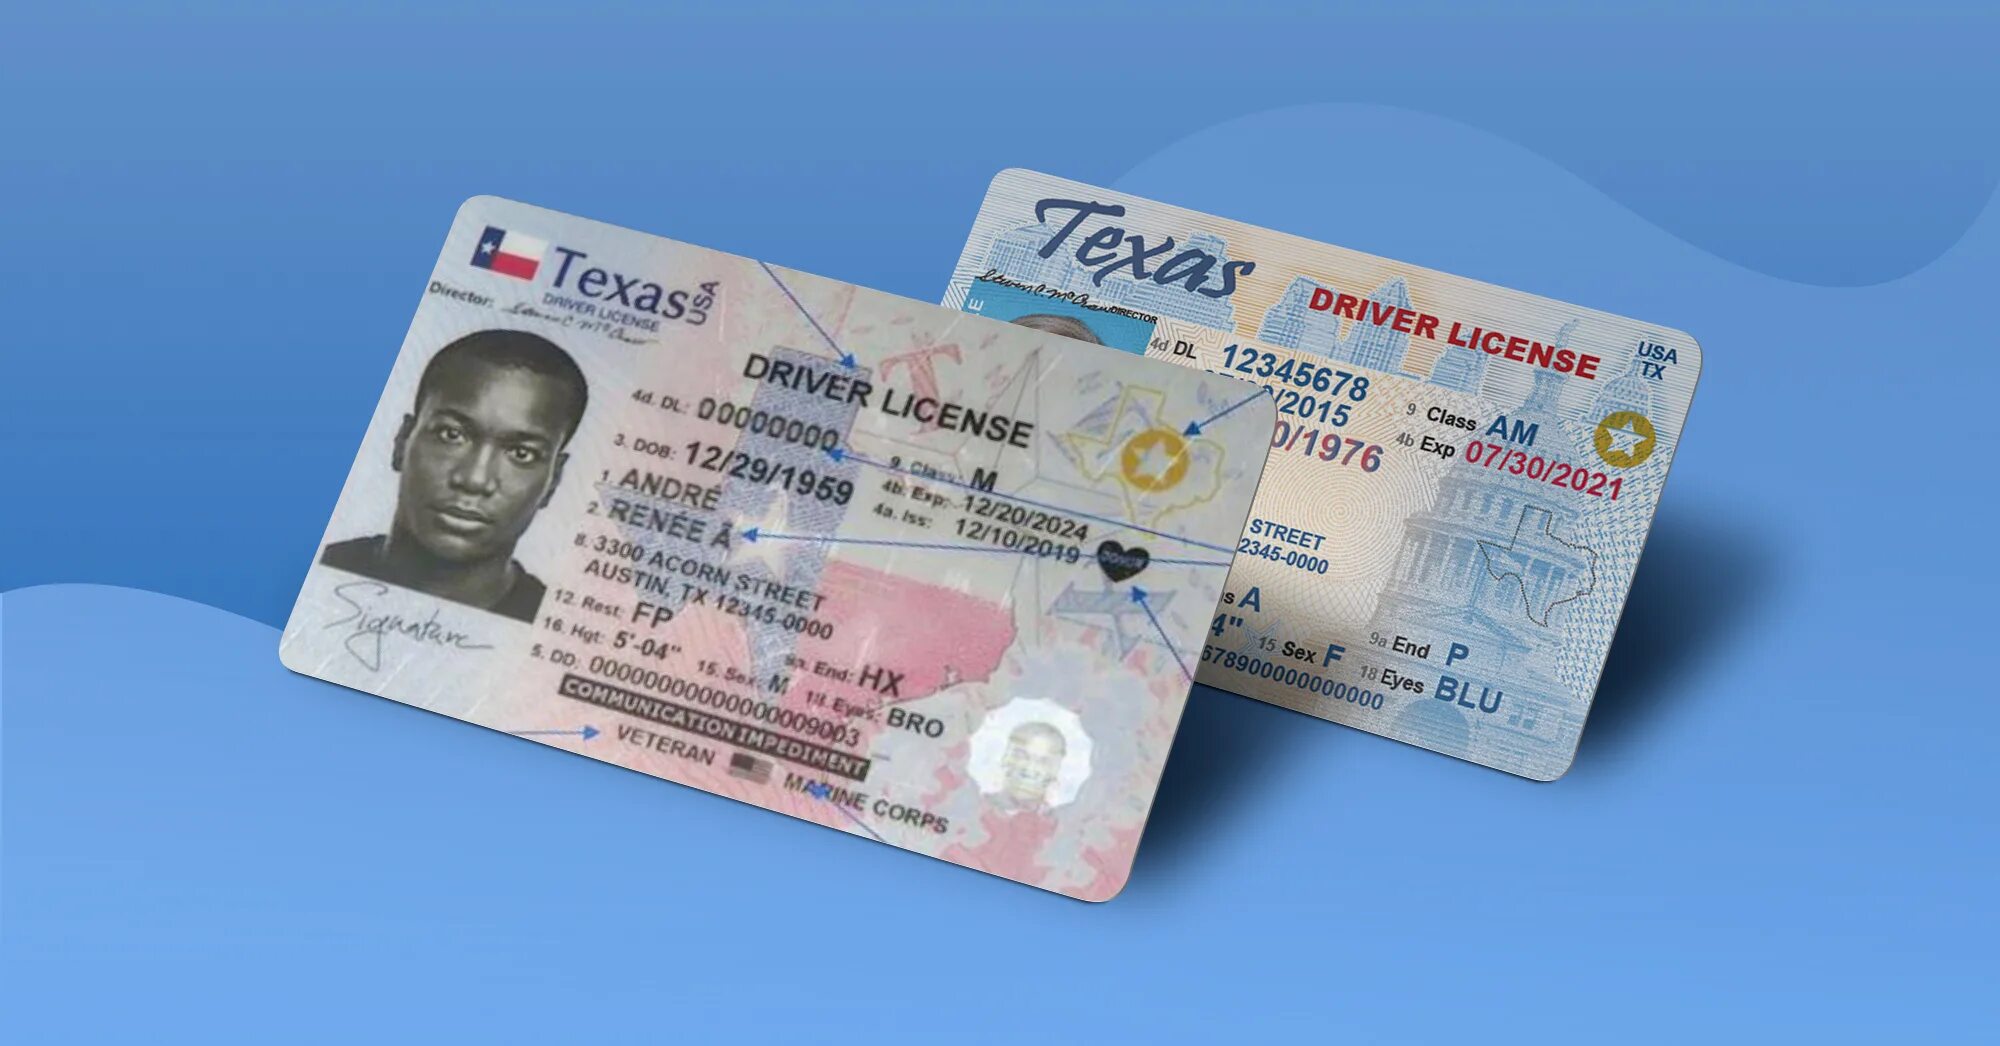 Ids license. Driver License. Texas Driver. Driver License Texas 2021. Texas Driving License.